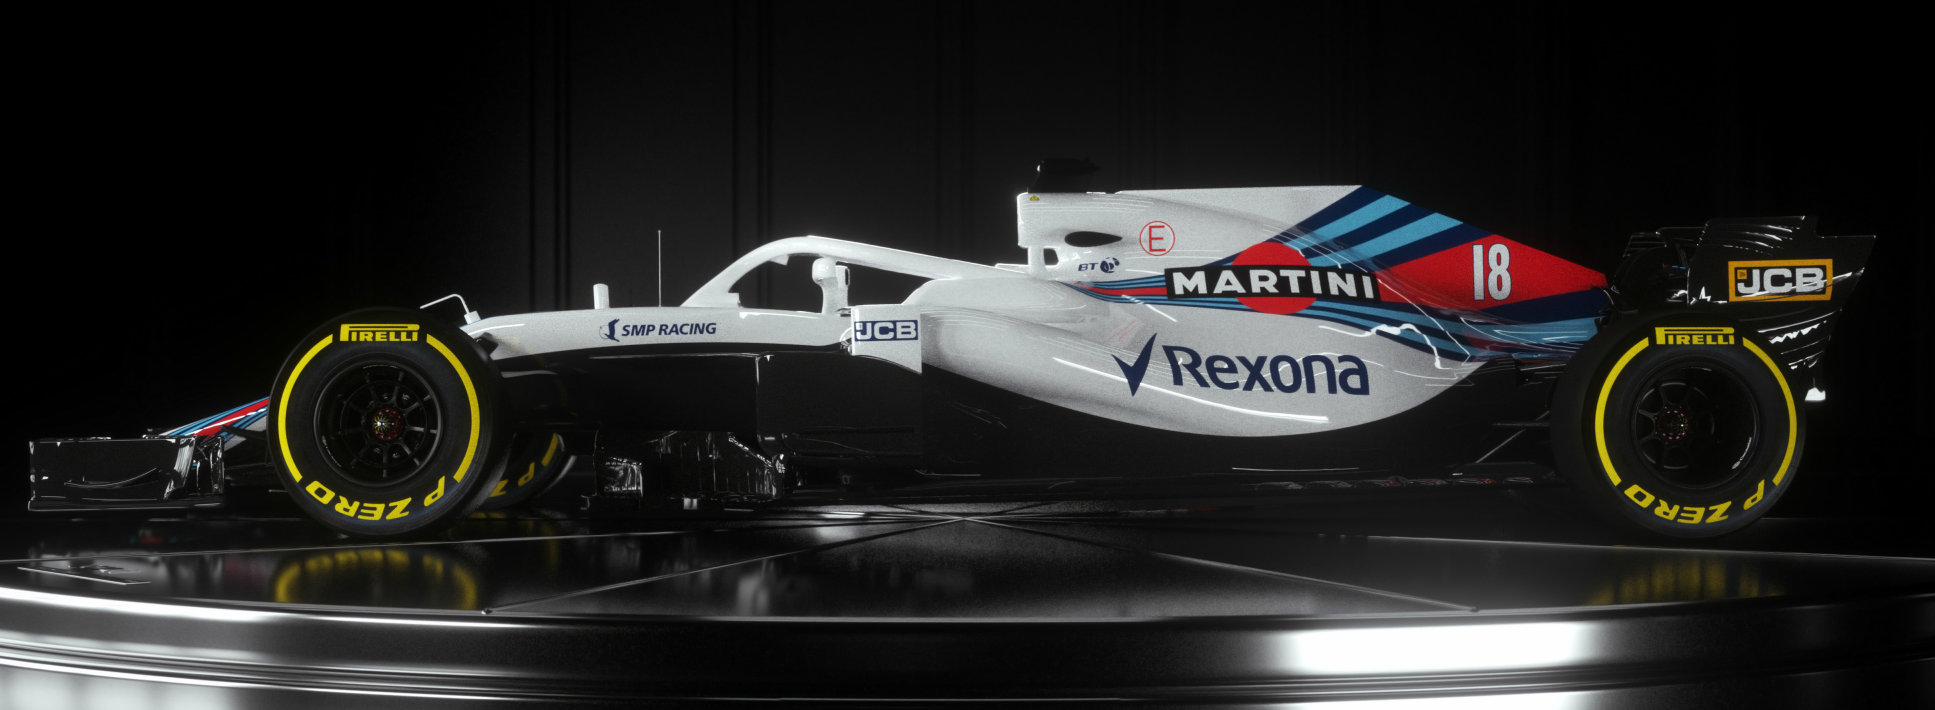 Williams Martini Racing presentó a su “retador“ auto de Formula 1 2018